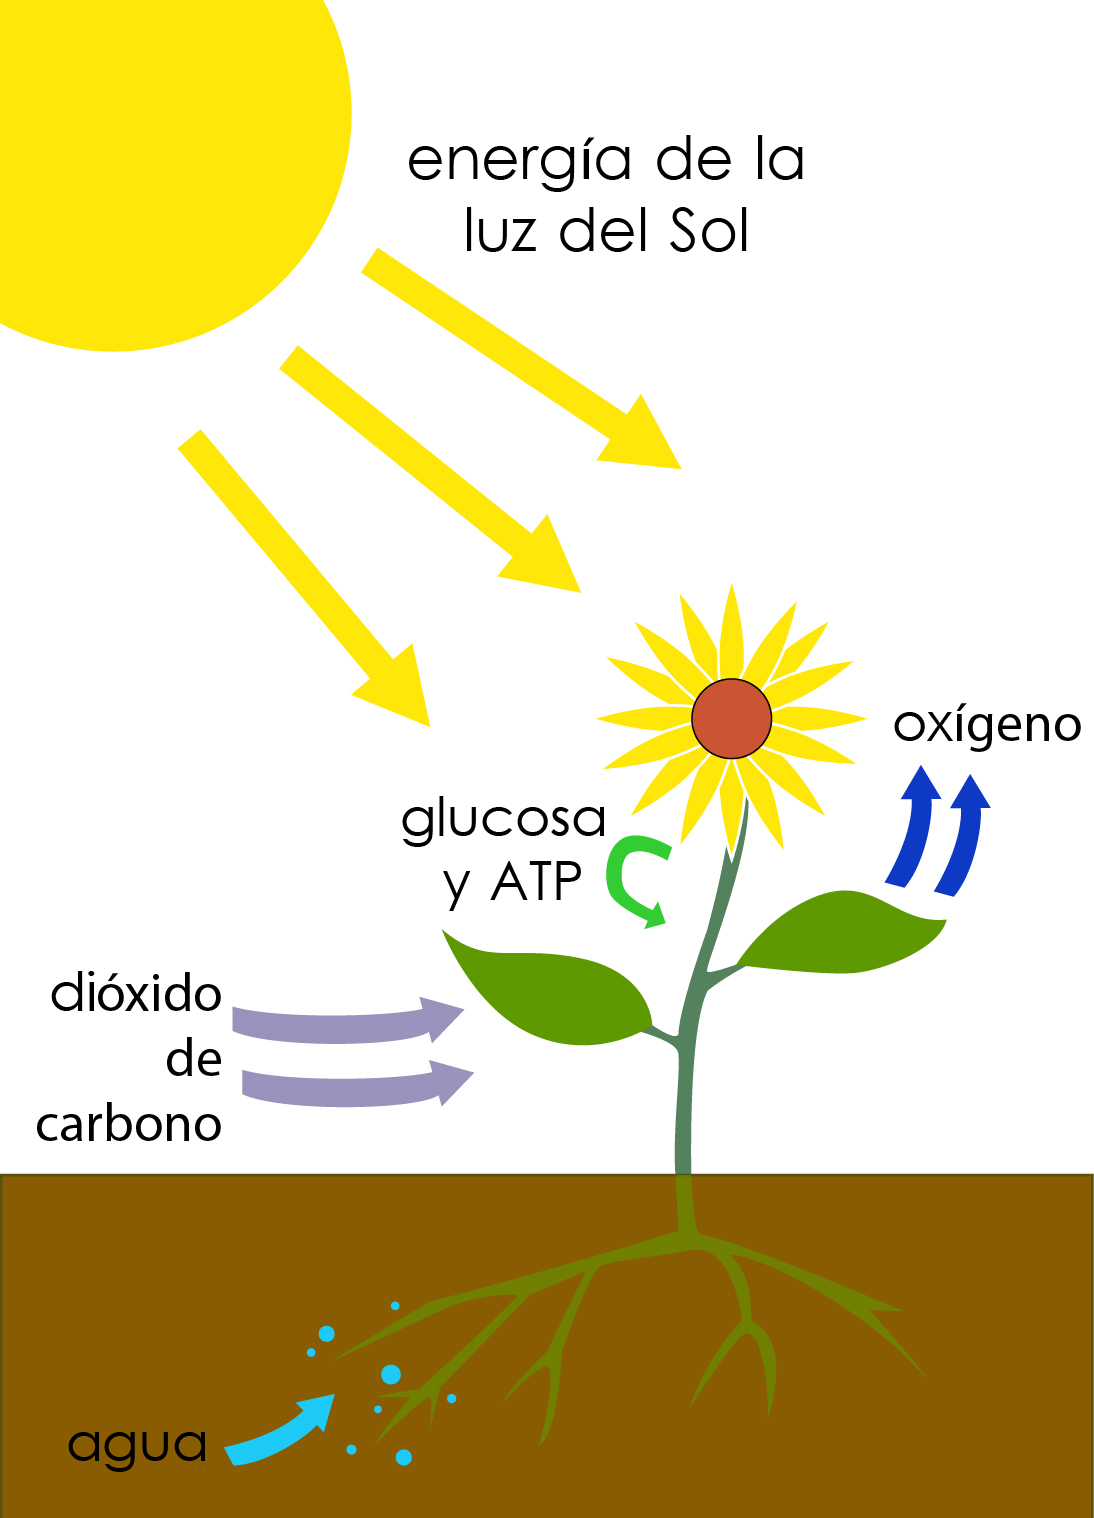 fotosintesis - Kelas 7 - Kuis